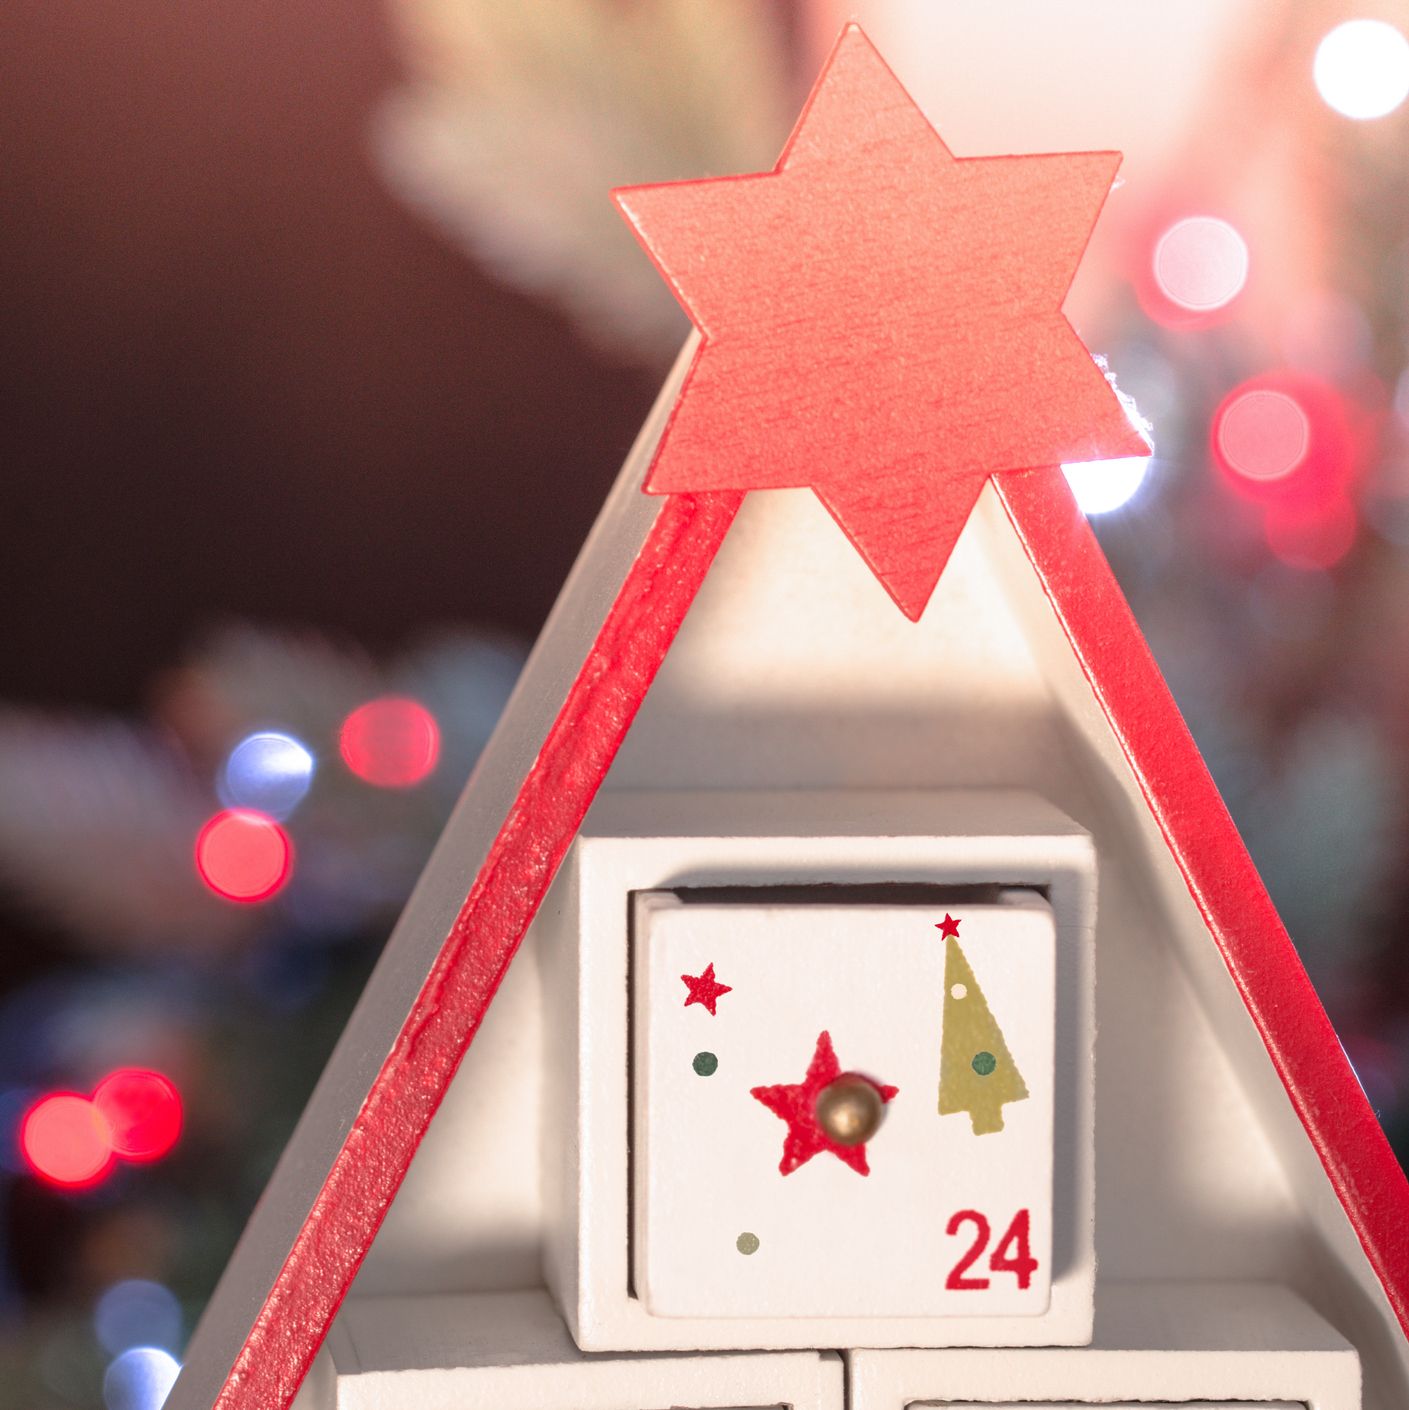 51 Best DIY Christmas Advent Calendars - Make Your Own Advent Calendar